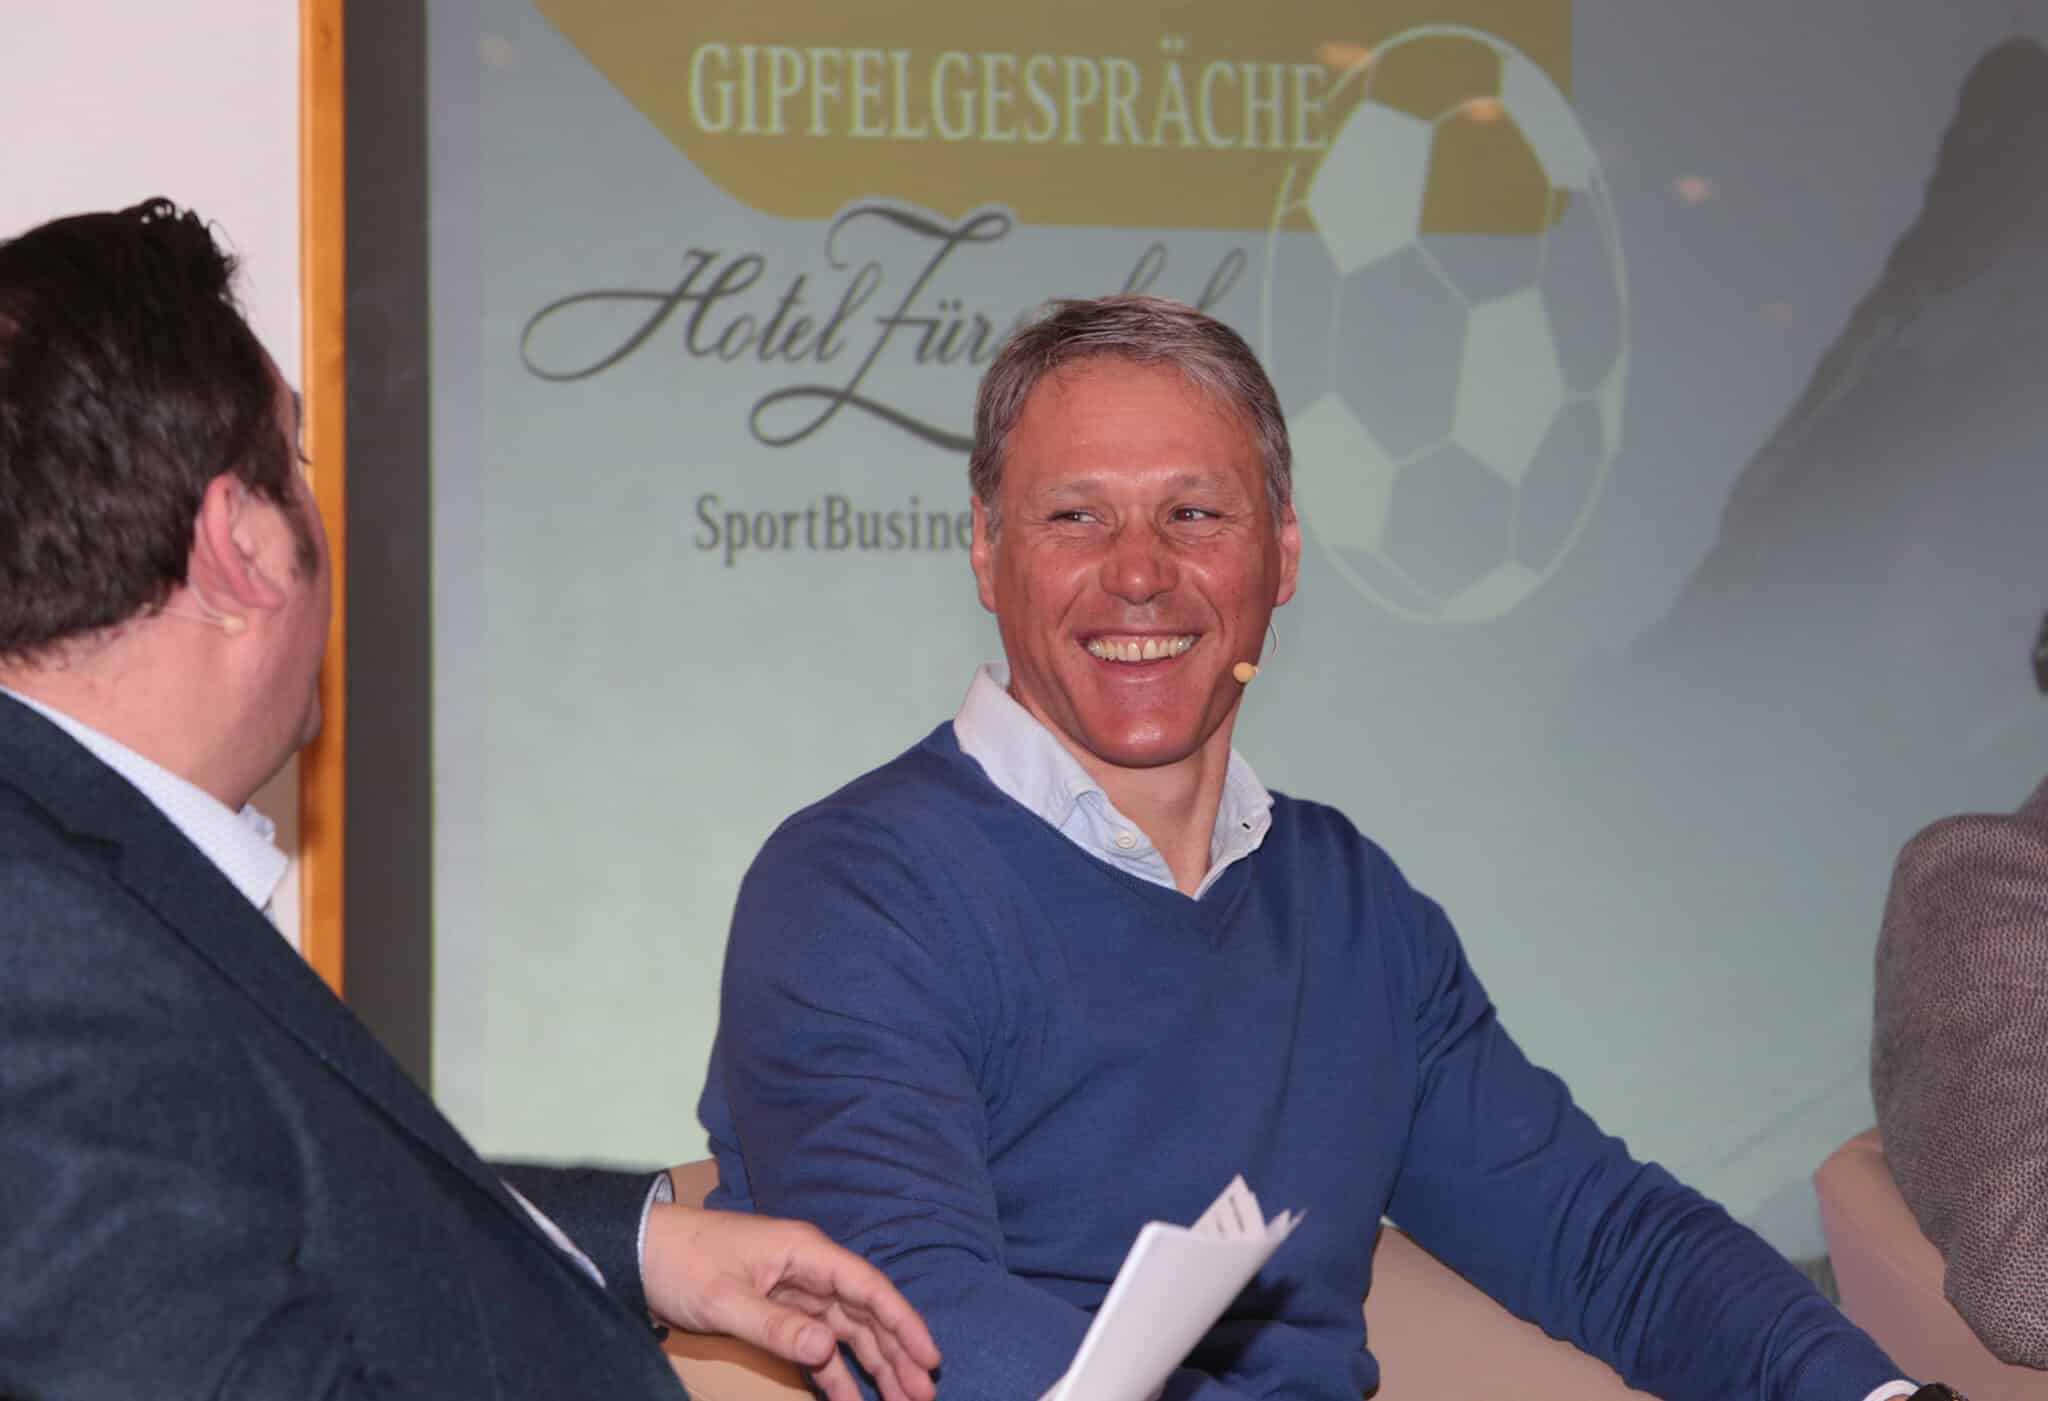 FUSSBALL KONGRESS Gipfelgespräche im Grand Resort Zürserhof: Geballte Fußballprominenz trifft sich am Arlberg [Klub 100]